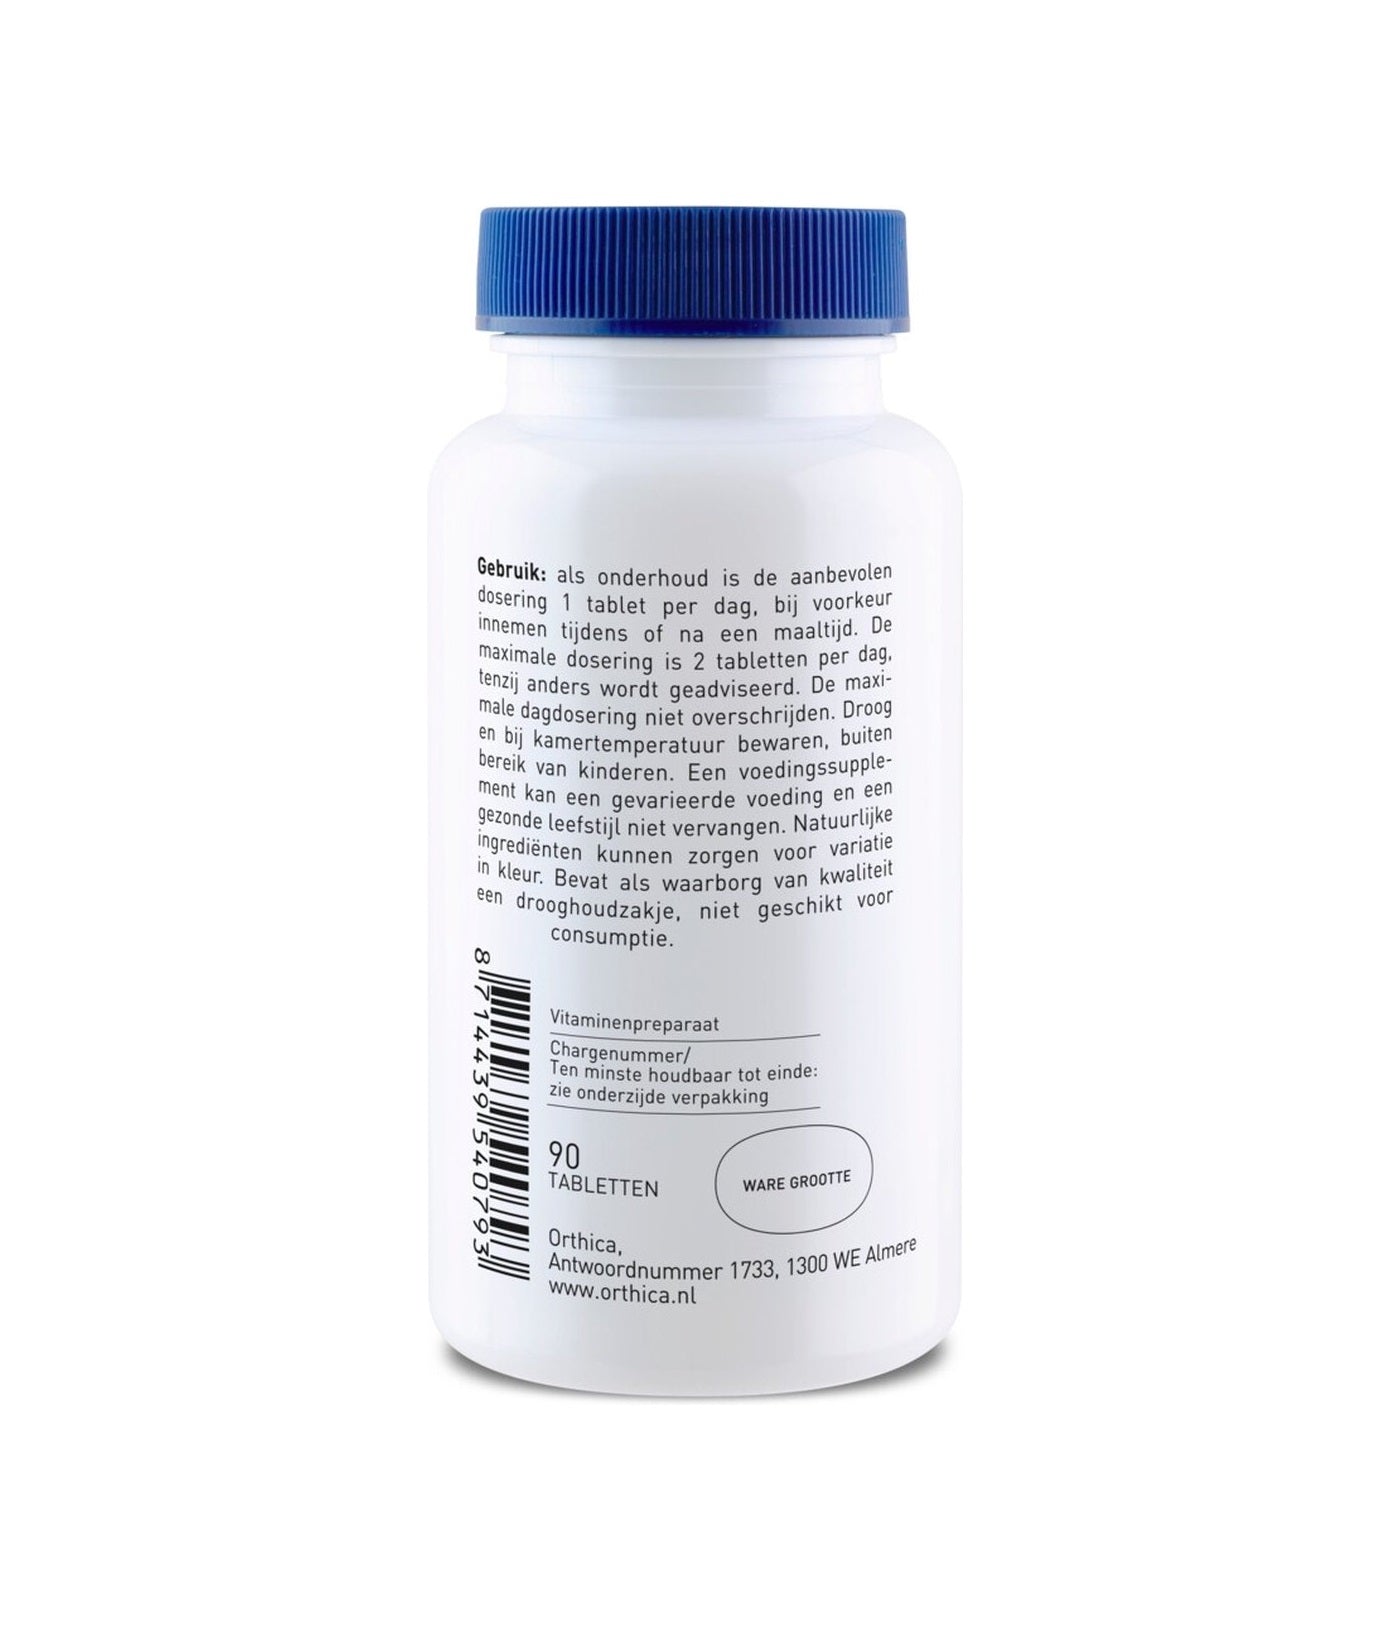 Orthica C-500 (Vitaminen) - 90 Tabletten